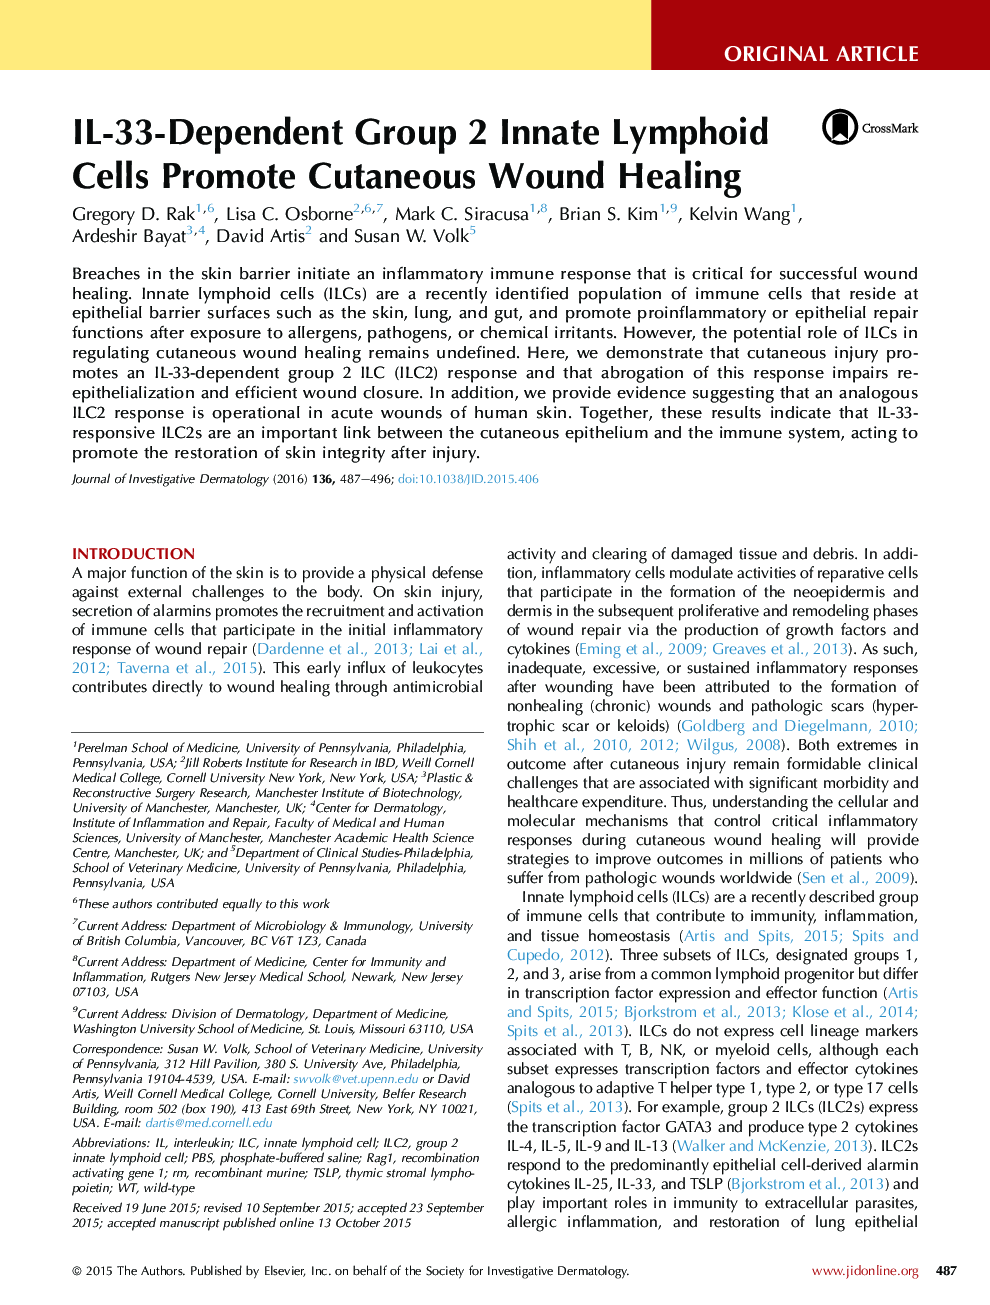 Original ArticleWound HealingIL-33-Dependent Group 2 Innate Lymphoid Cells Promote Cutaneous Wound Healing